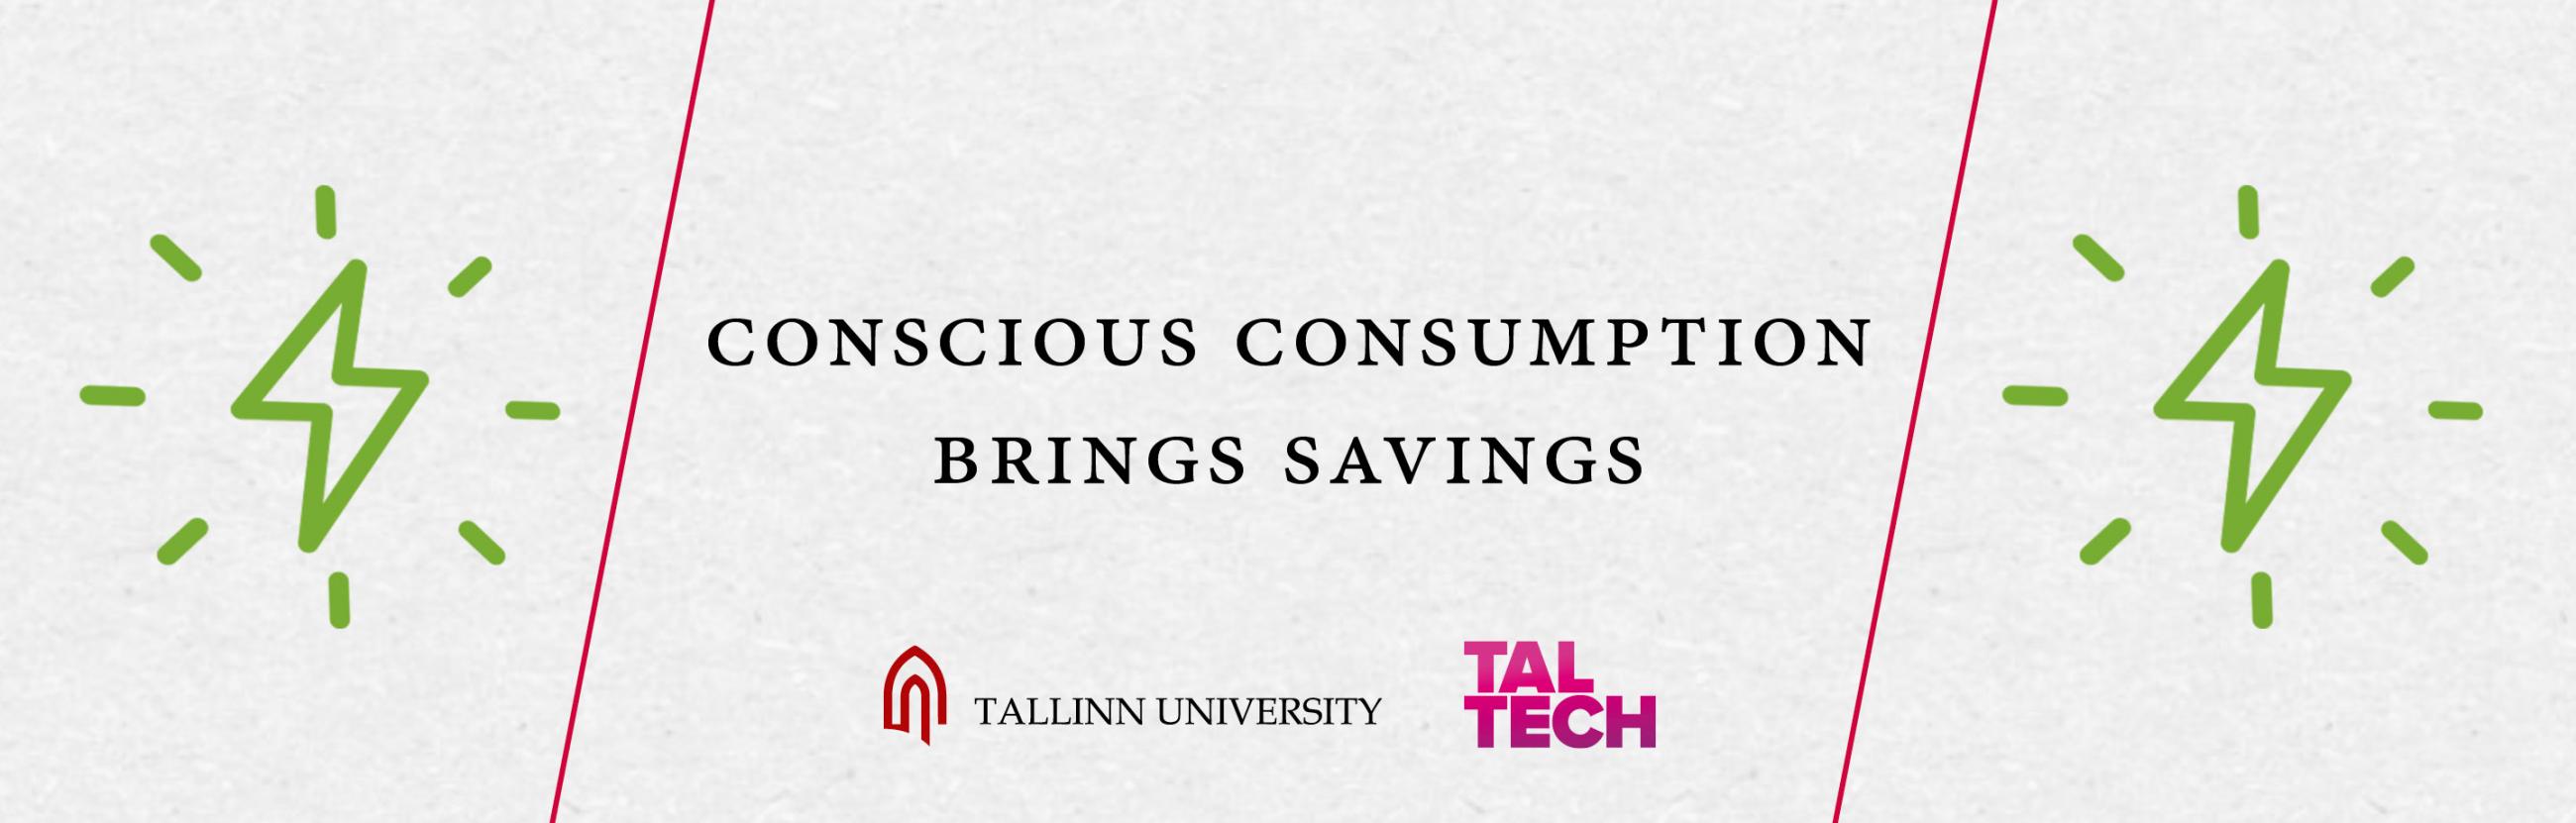 TLU and TalTech: conscious consumption brings savings